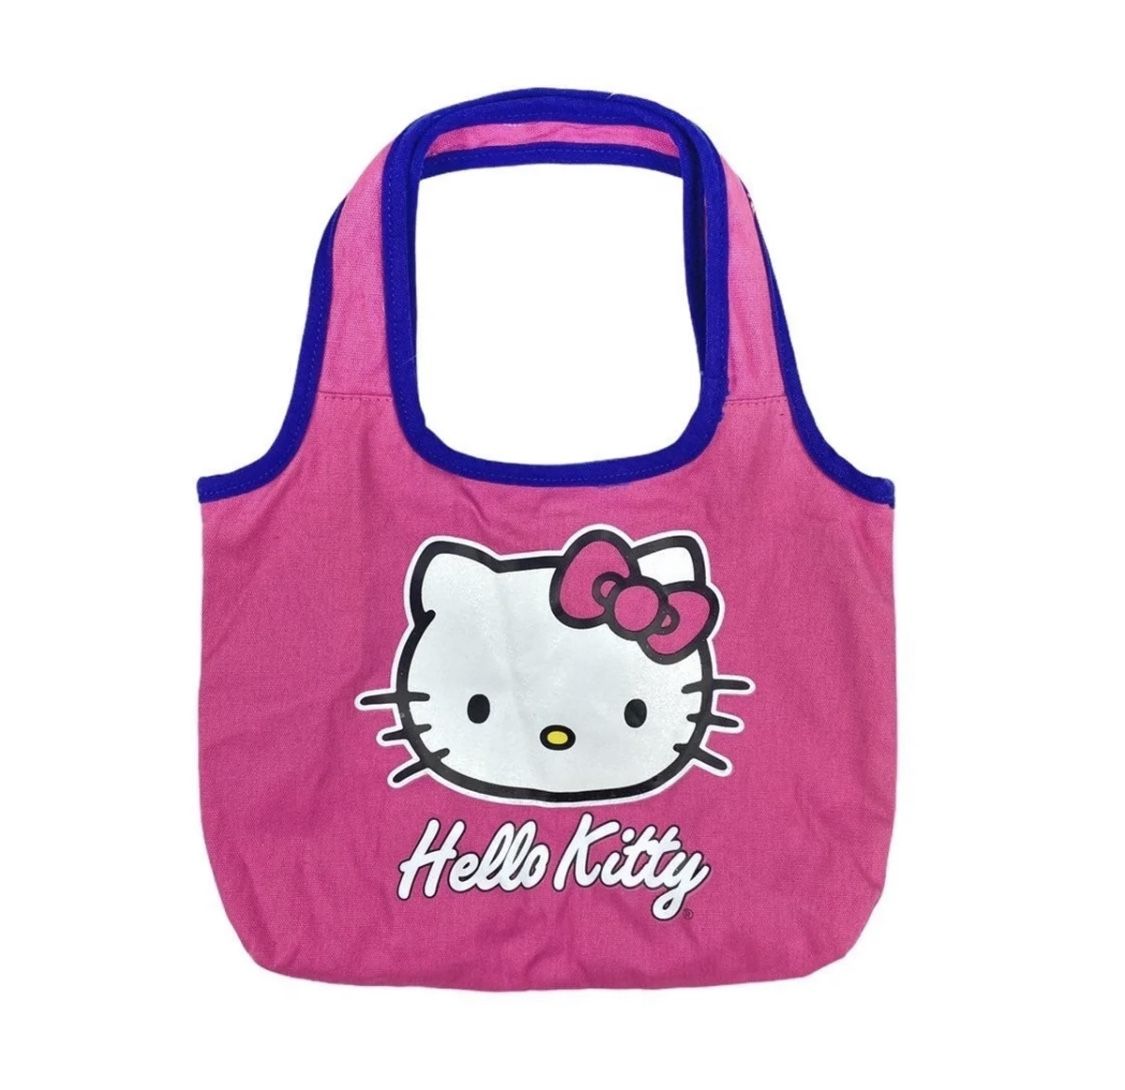 Sanrio Hello Kitty Tote Bag 